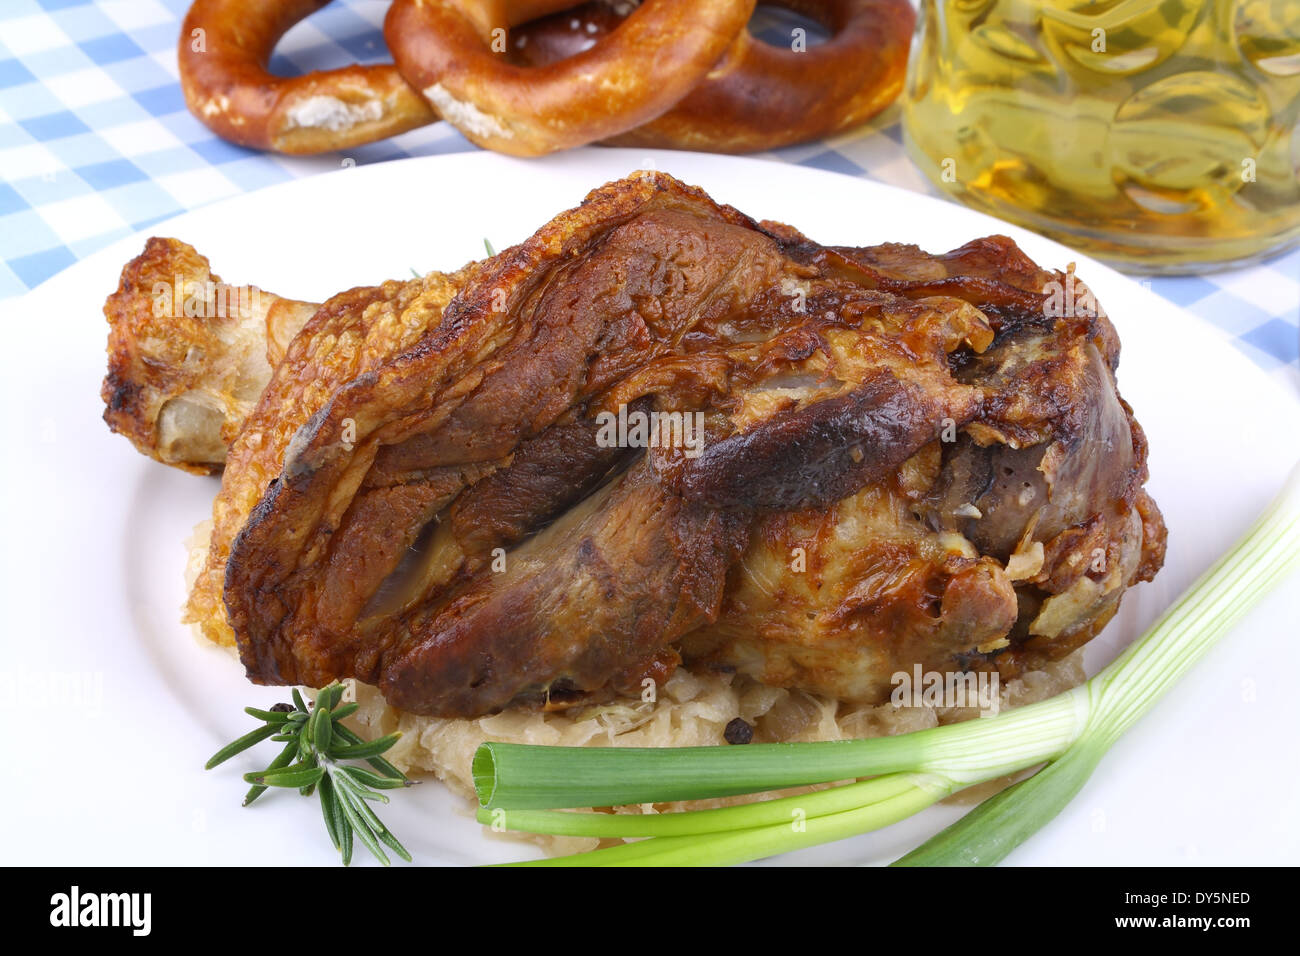 Grilled pork hock with sauerkraut, pretzels, beer, close up Stock Photo